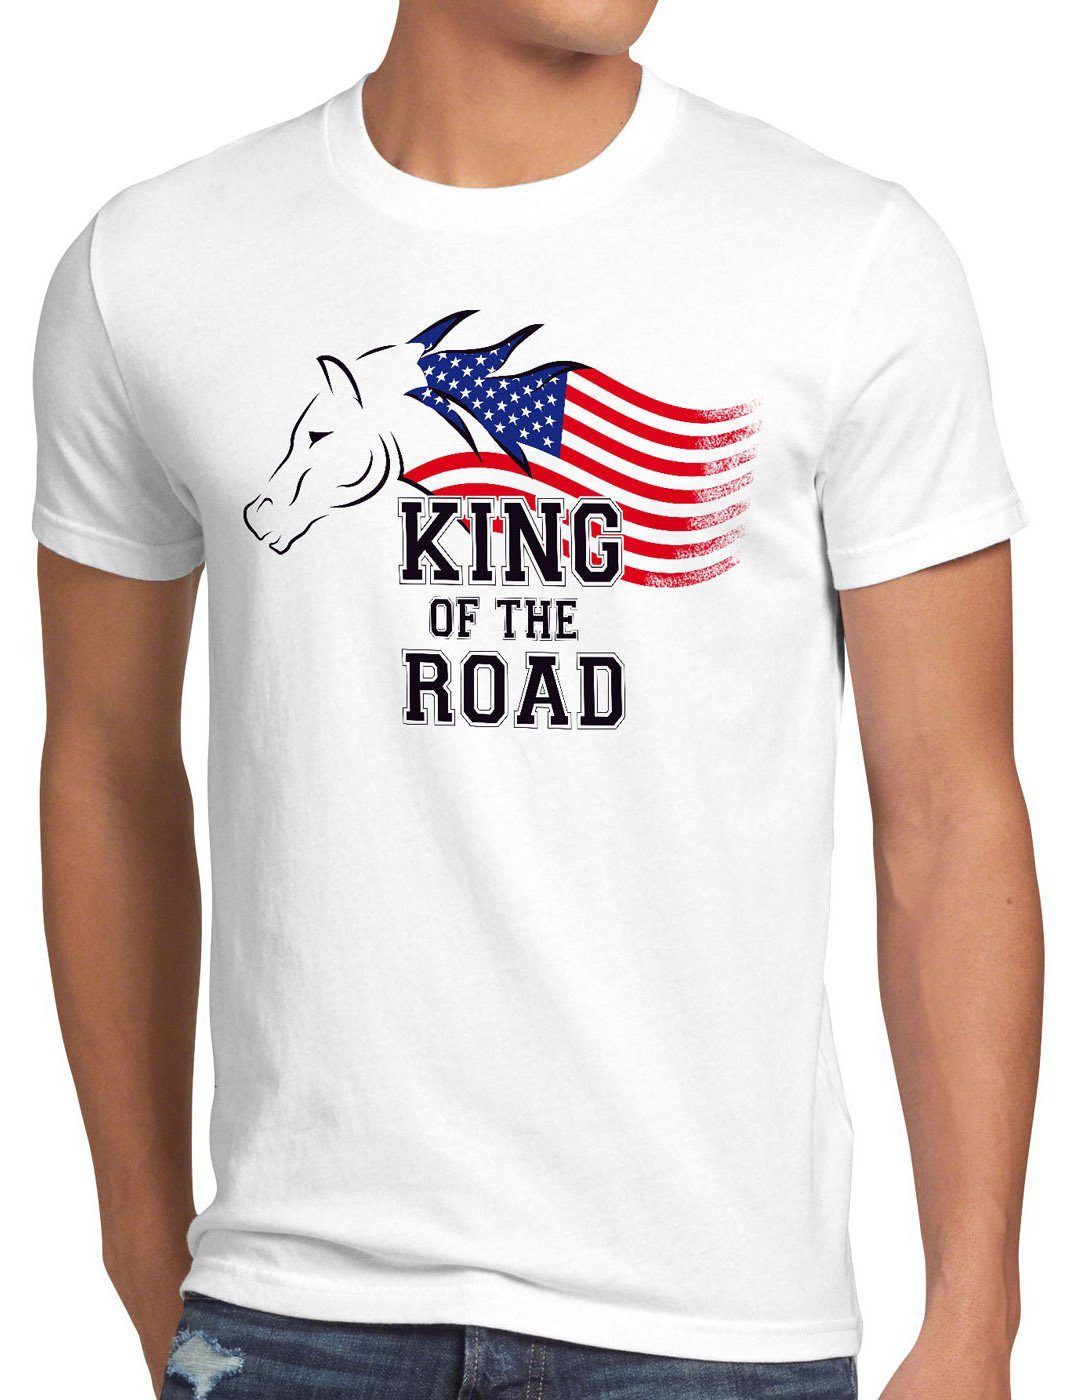 Vollendung style3 Print-Shirt Herren usa the America Road tuning Muscle of Amerika King auto motor Car T-Shirt weiß